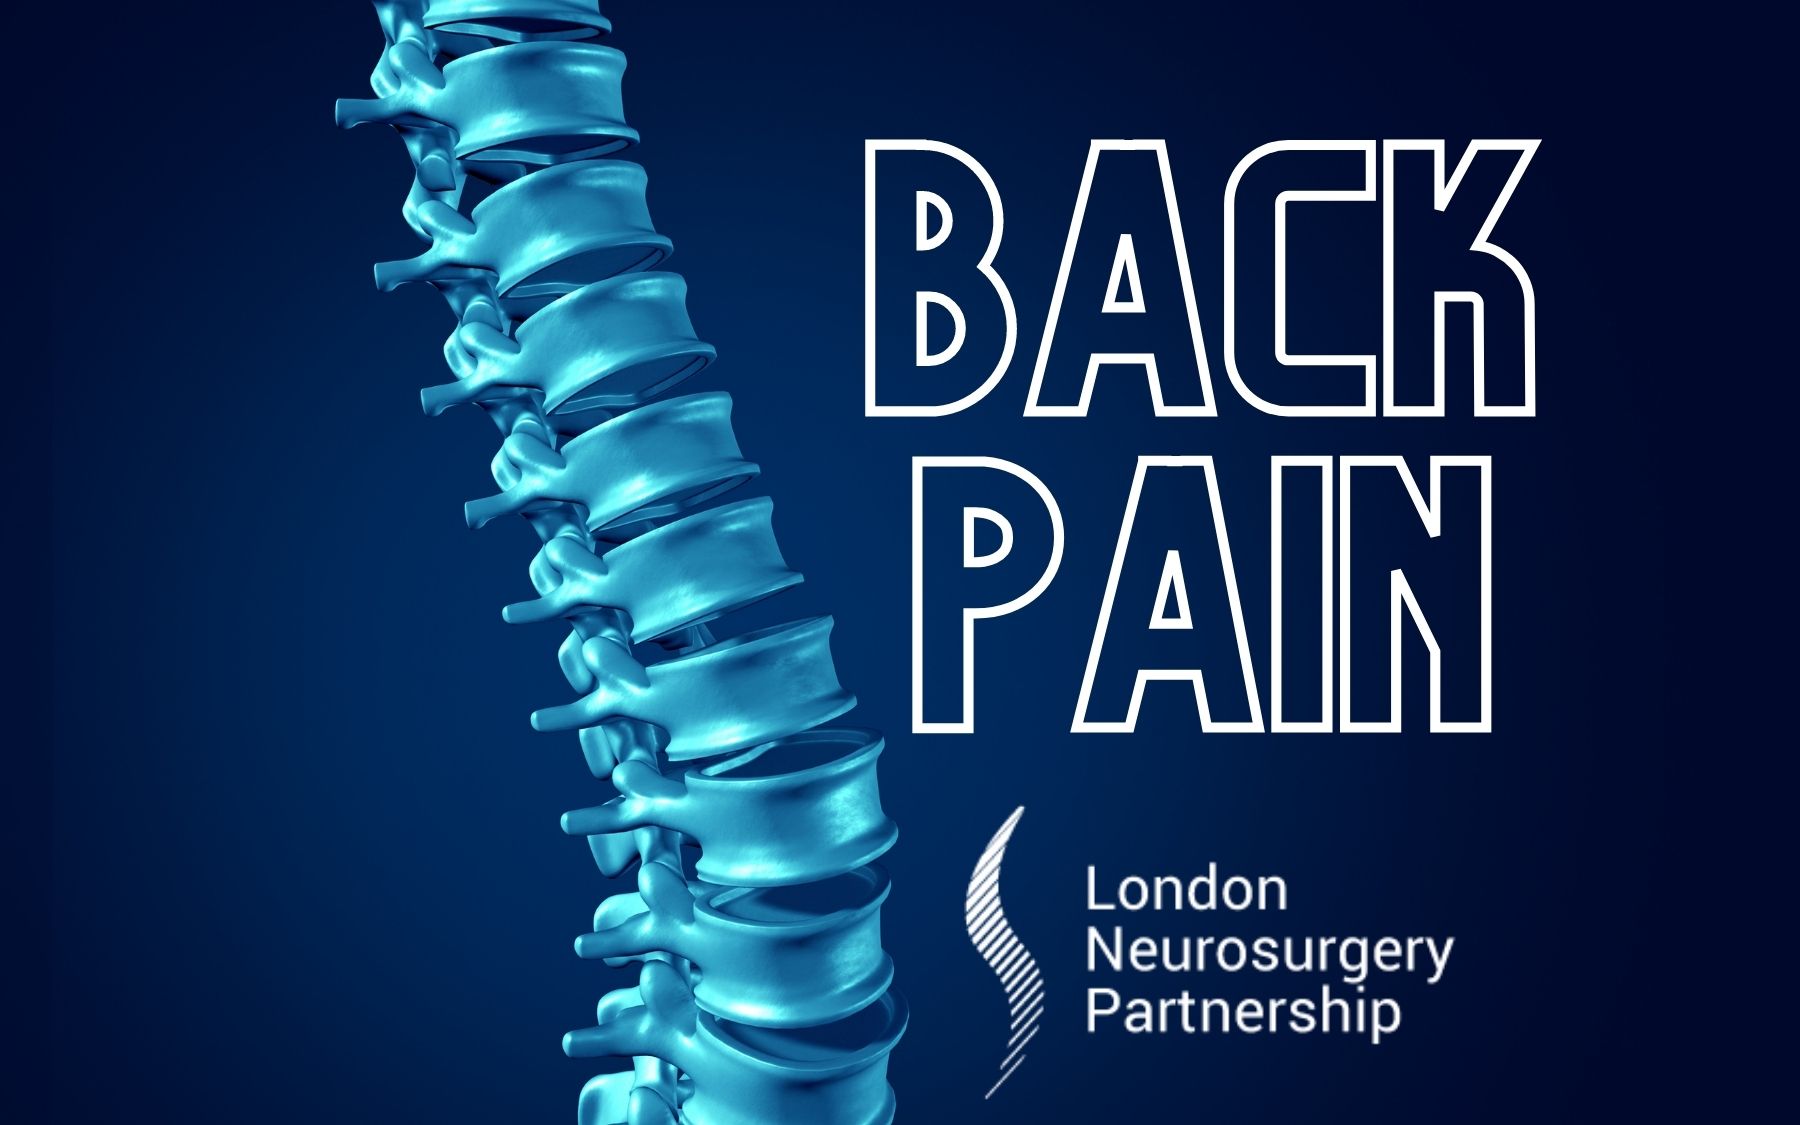 back pain london neurosurgery partnership